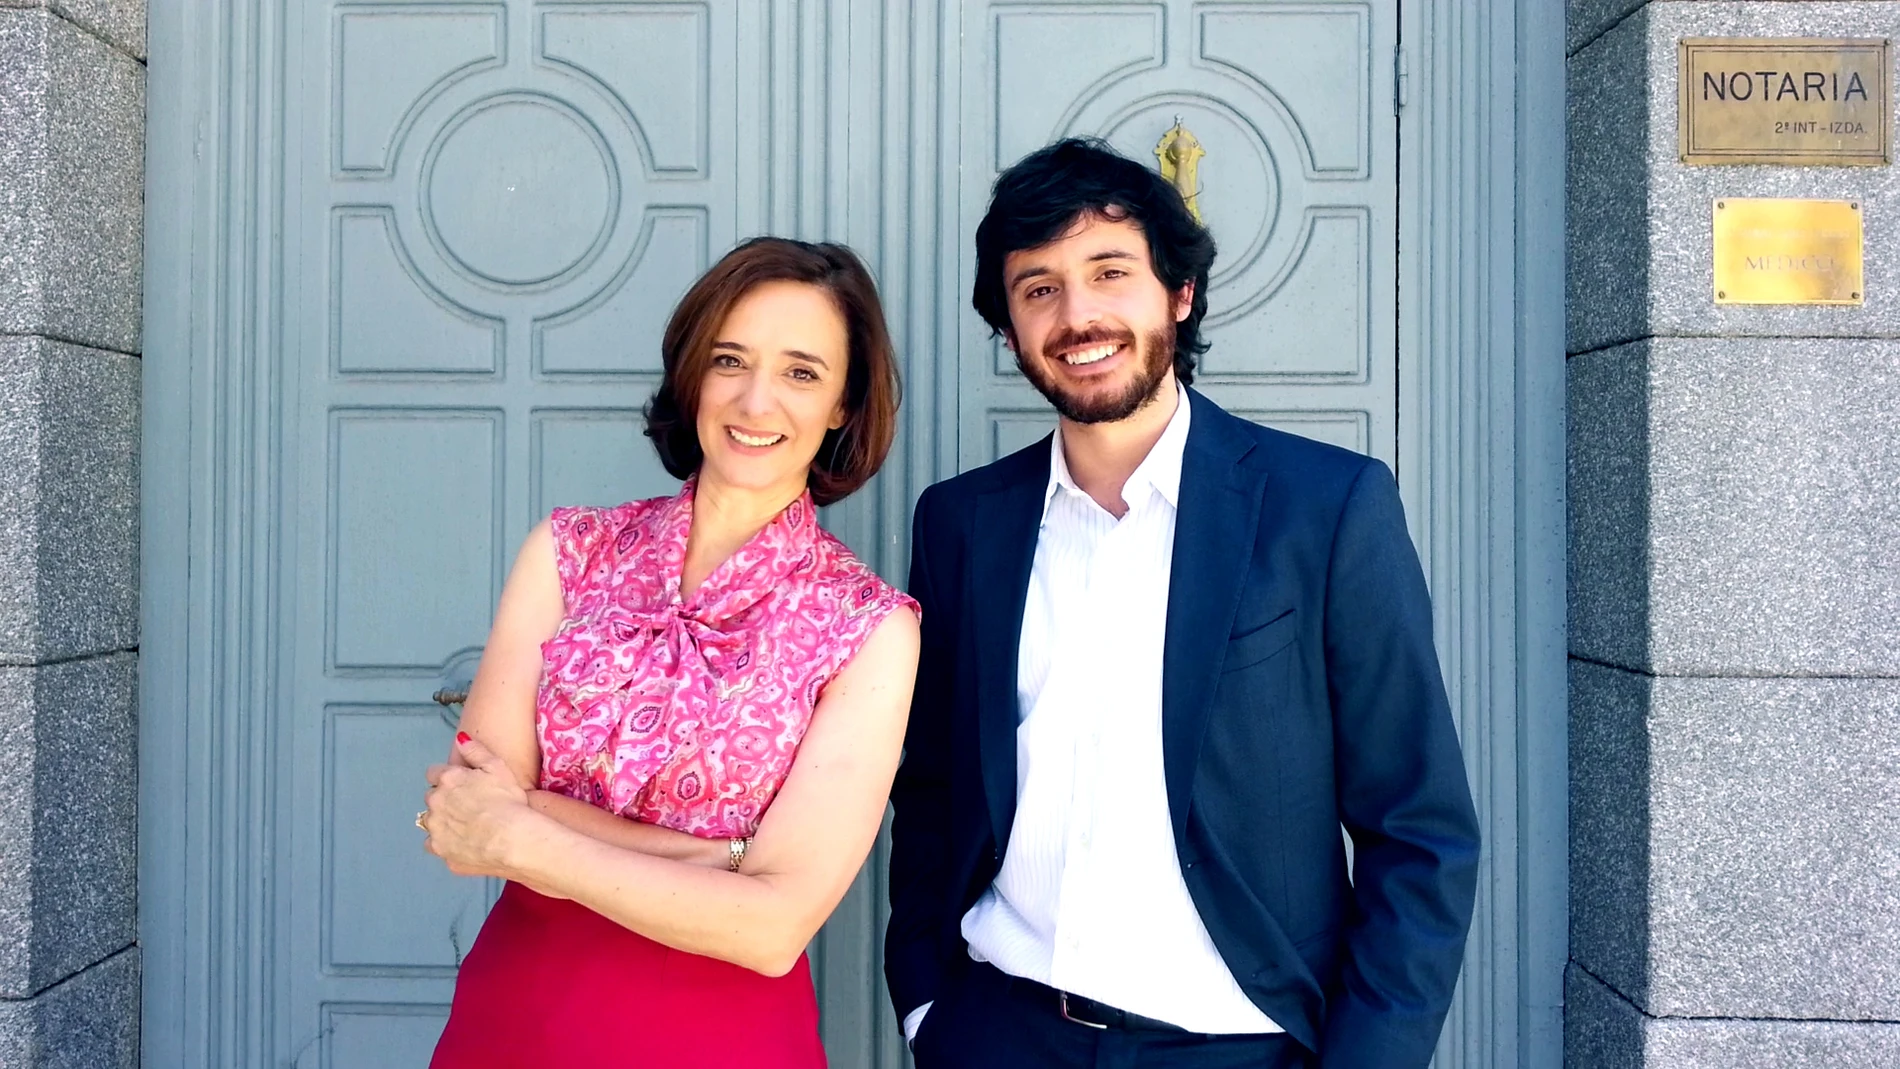 Javier Pereira y Ana Torrent: "Hemos sido muy felices"